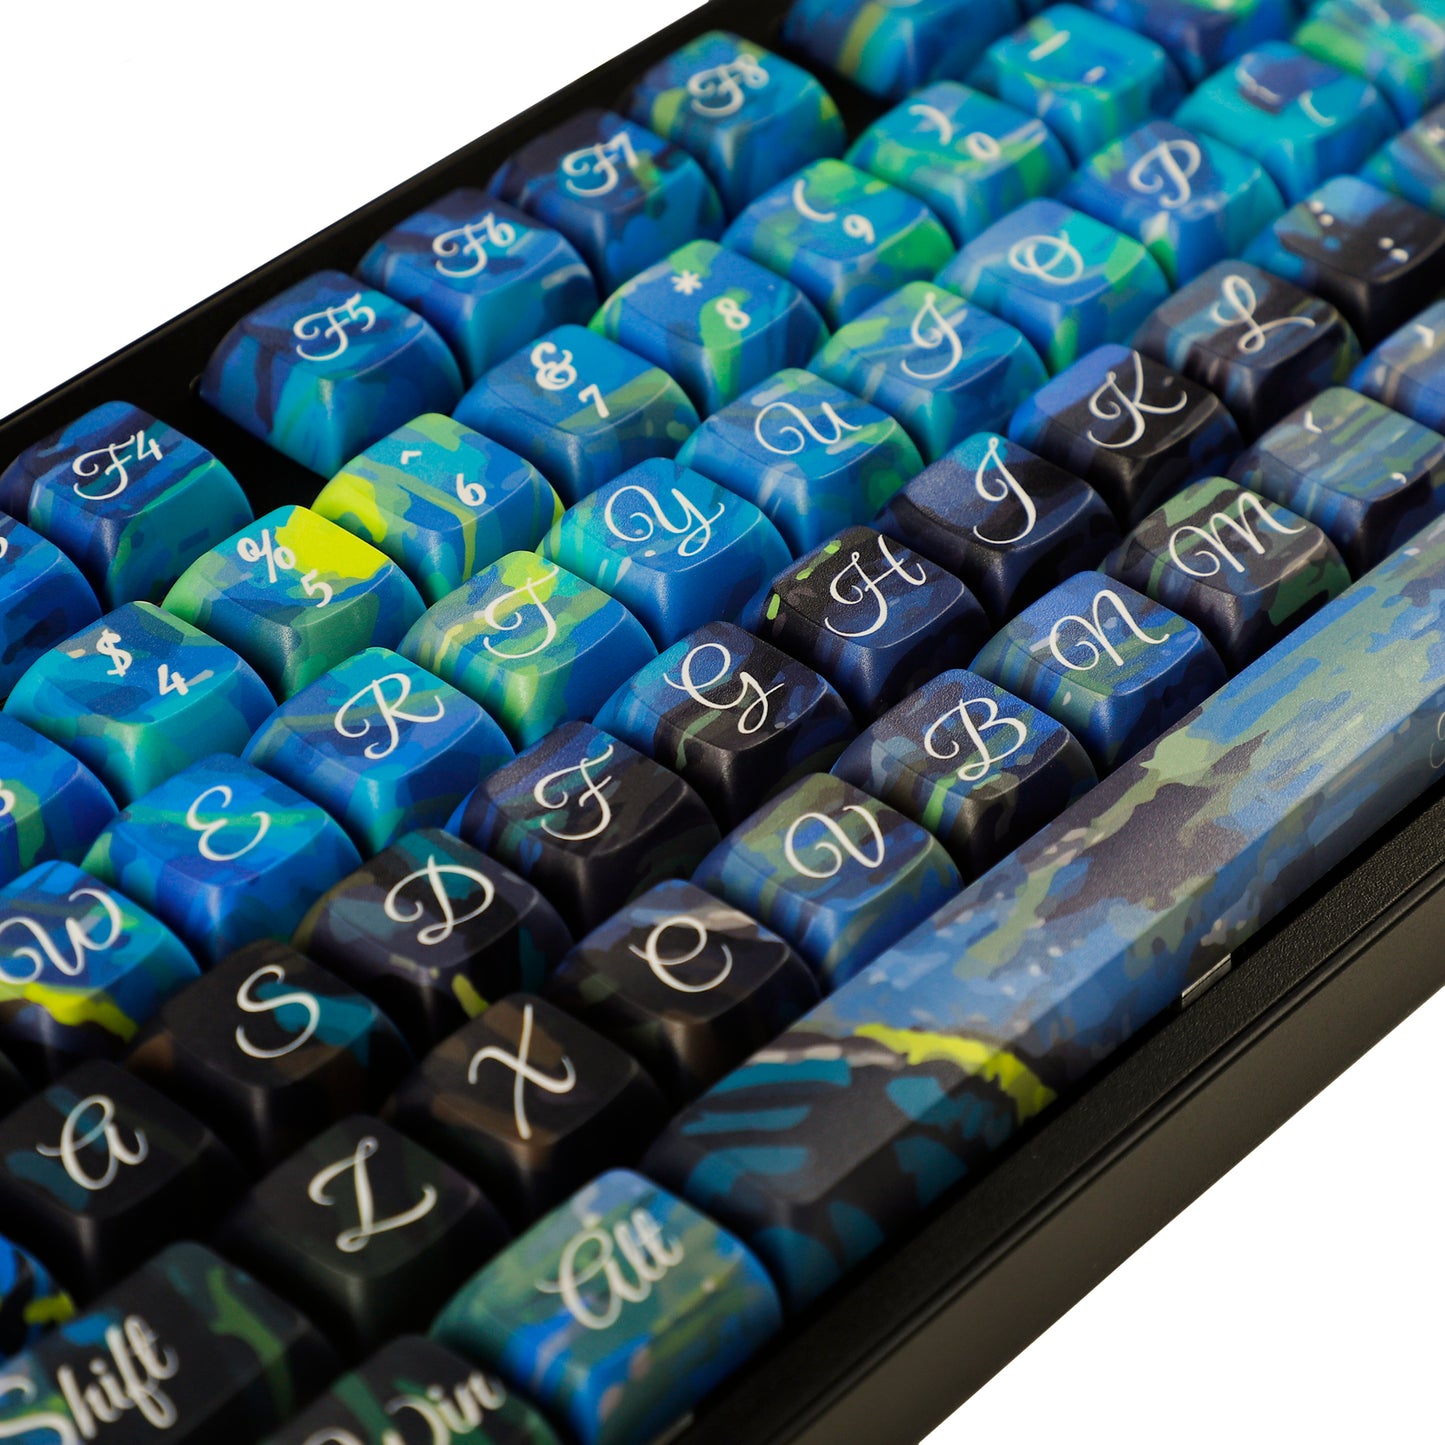 YMDK Secrect Garden 126 keys 5 Sides Over Oil Painting Dye Sub XDA PBT Keycap For MX Keyboard Apex